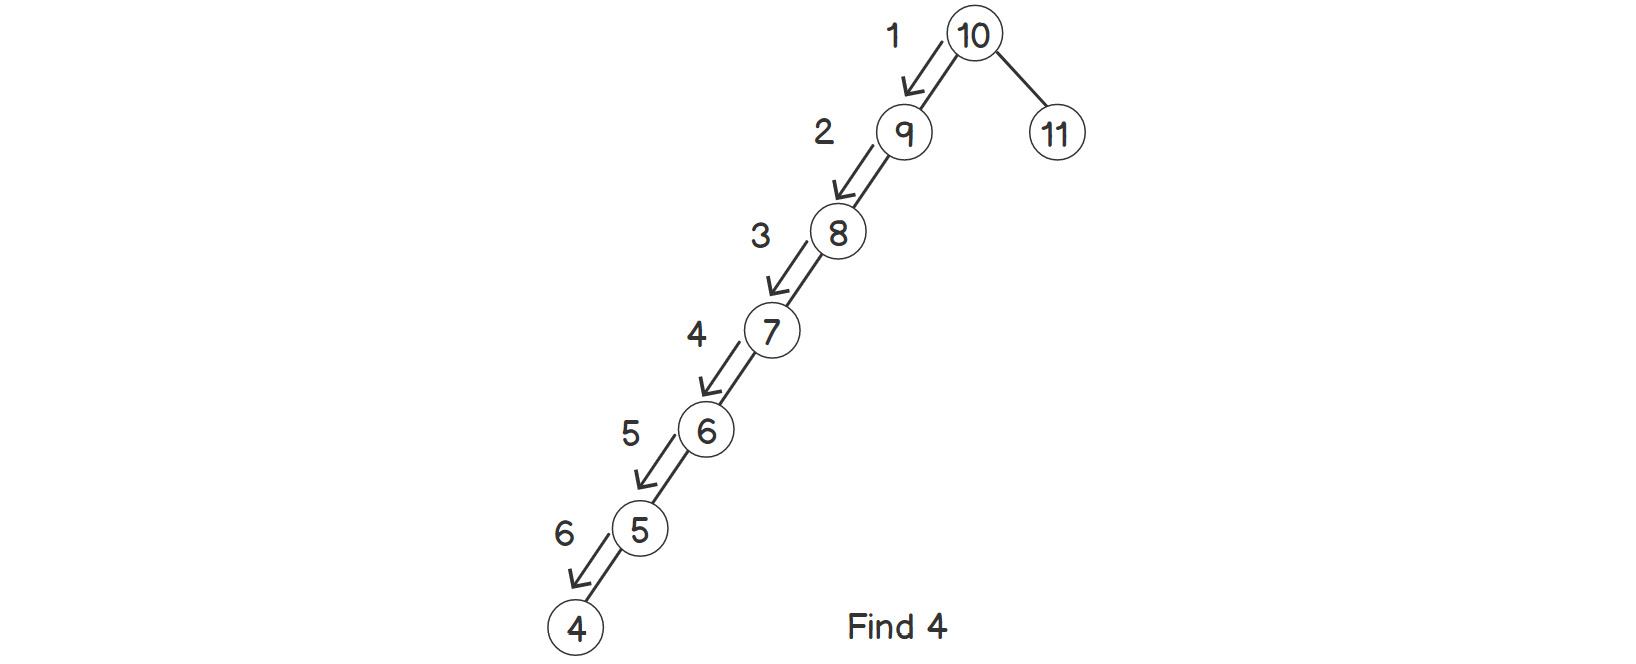 Figure 2.11: Finding an element in a skewed binary search tree